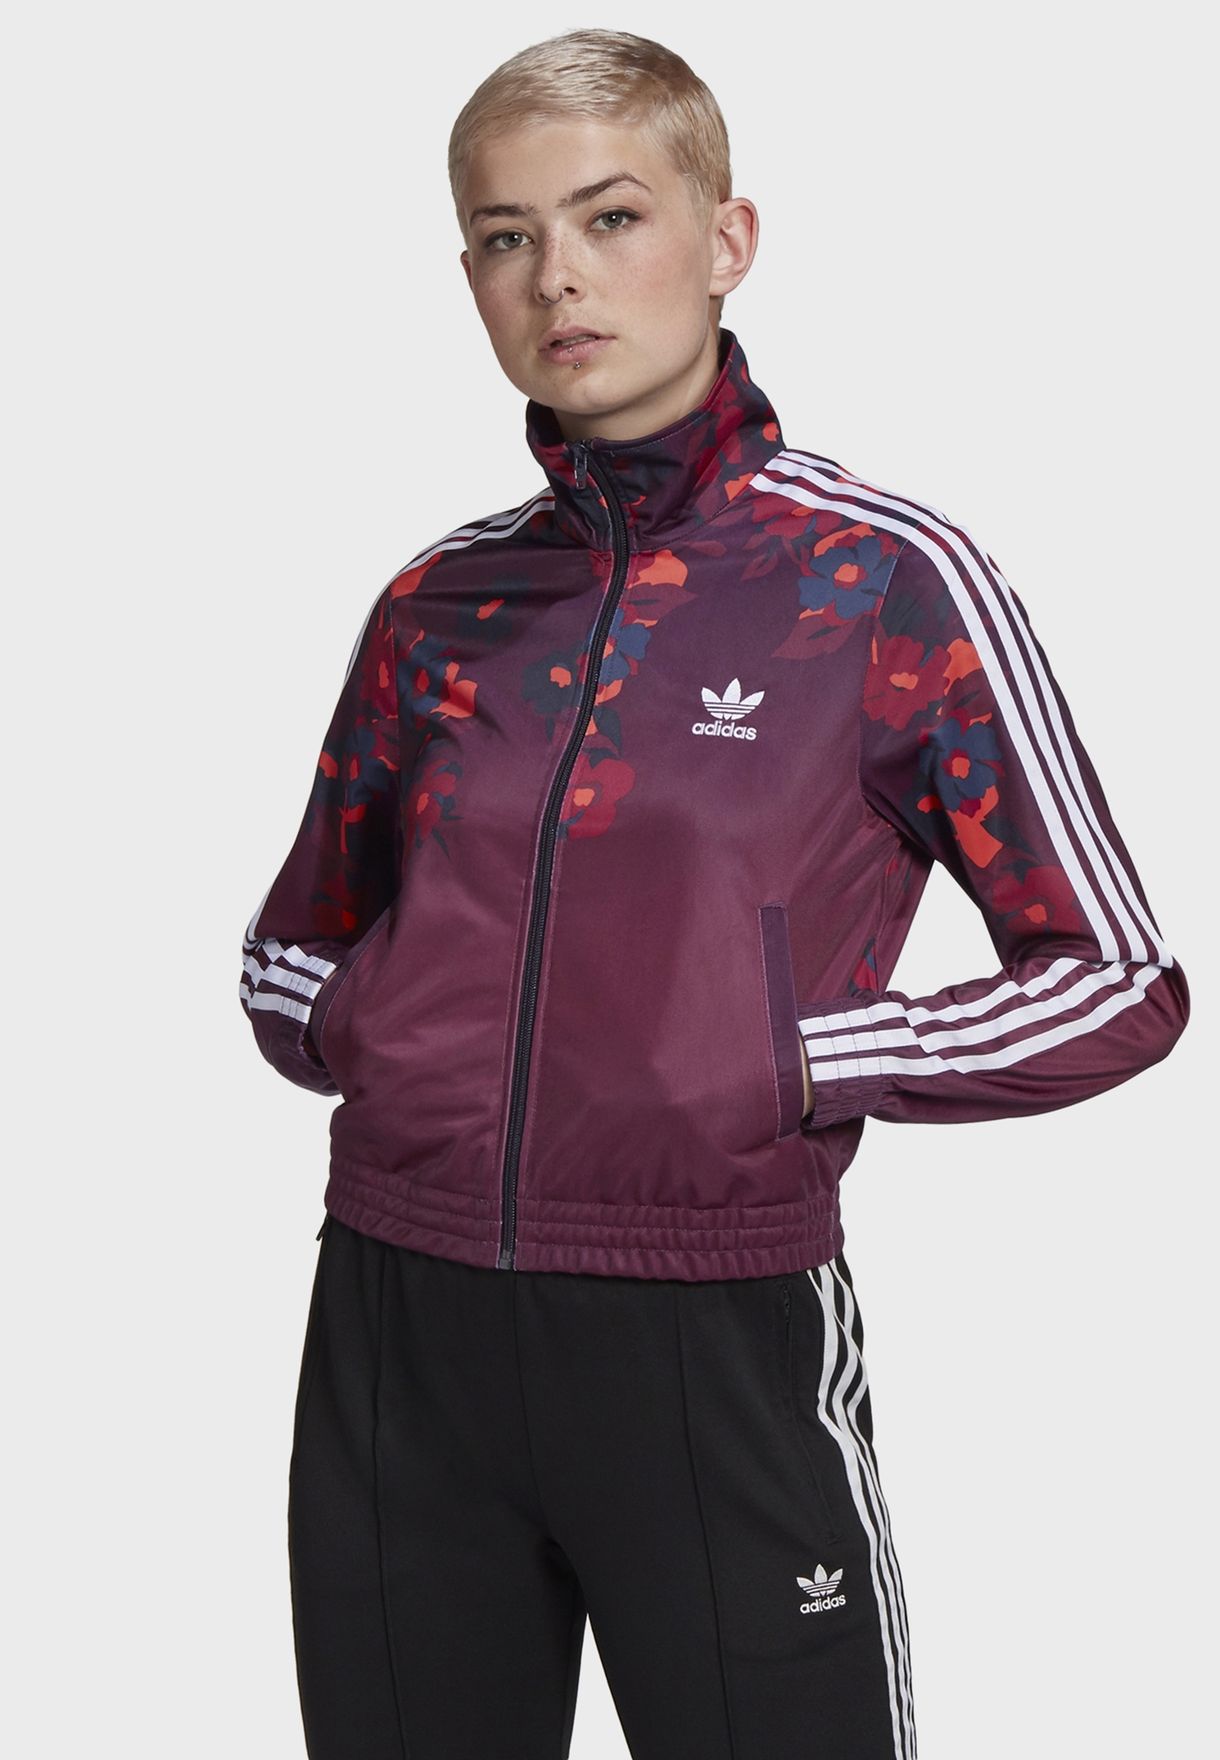 adidas originals track jacket with sleeve stripes